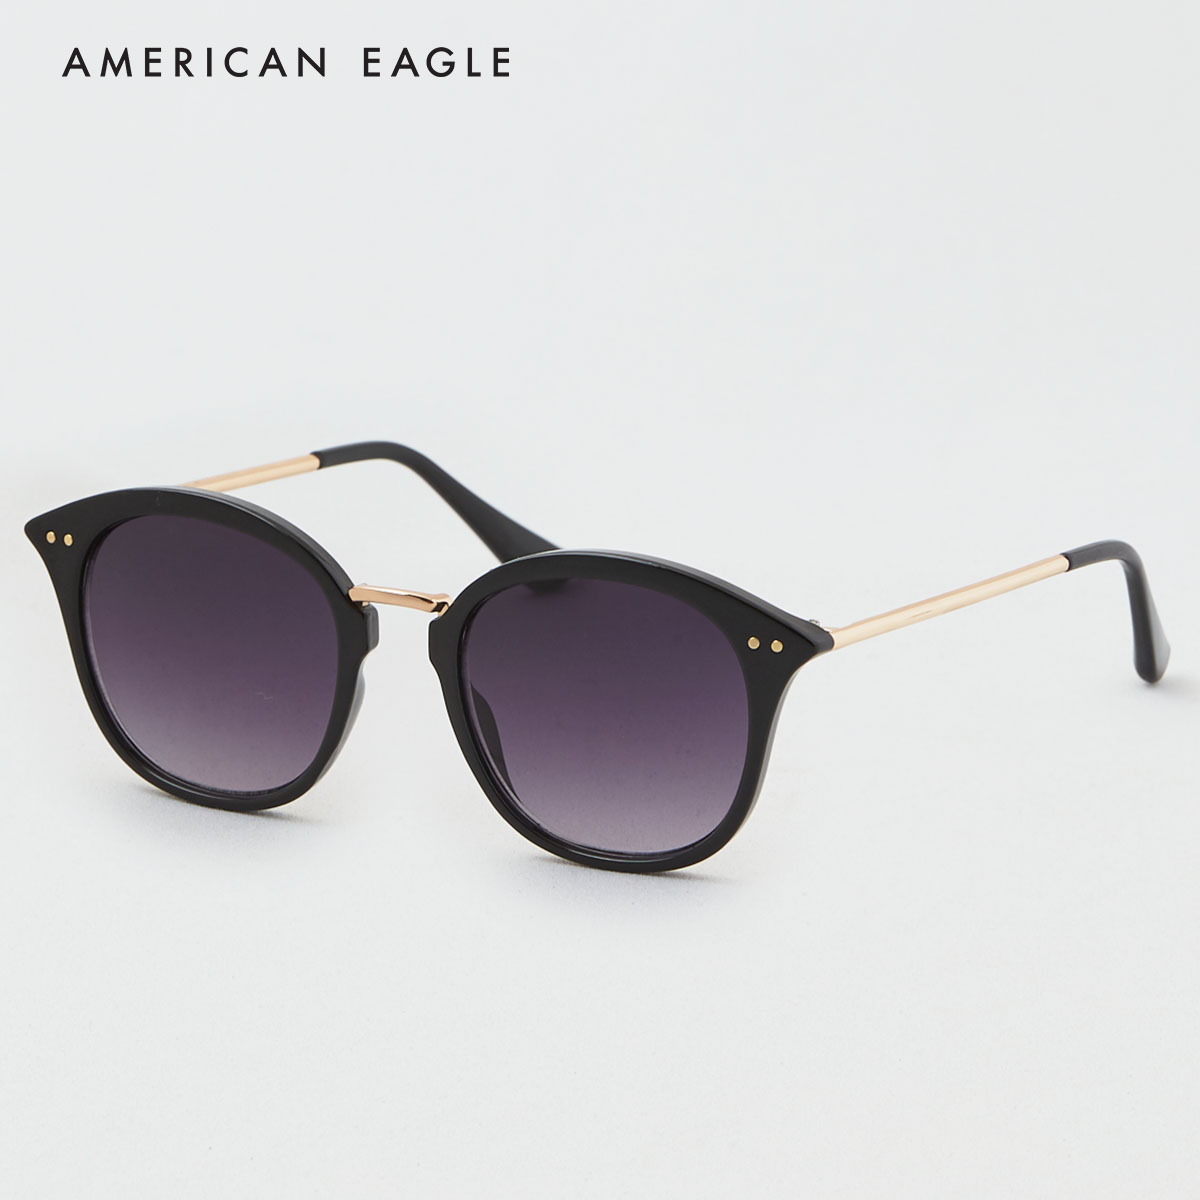 American Eagle Black Clubmaster Sunglasses แว่นตา ผู้หญิง แฟชั่น(048-8603-001)